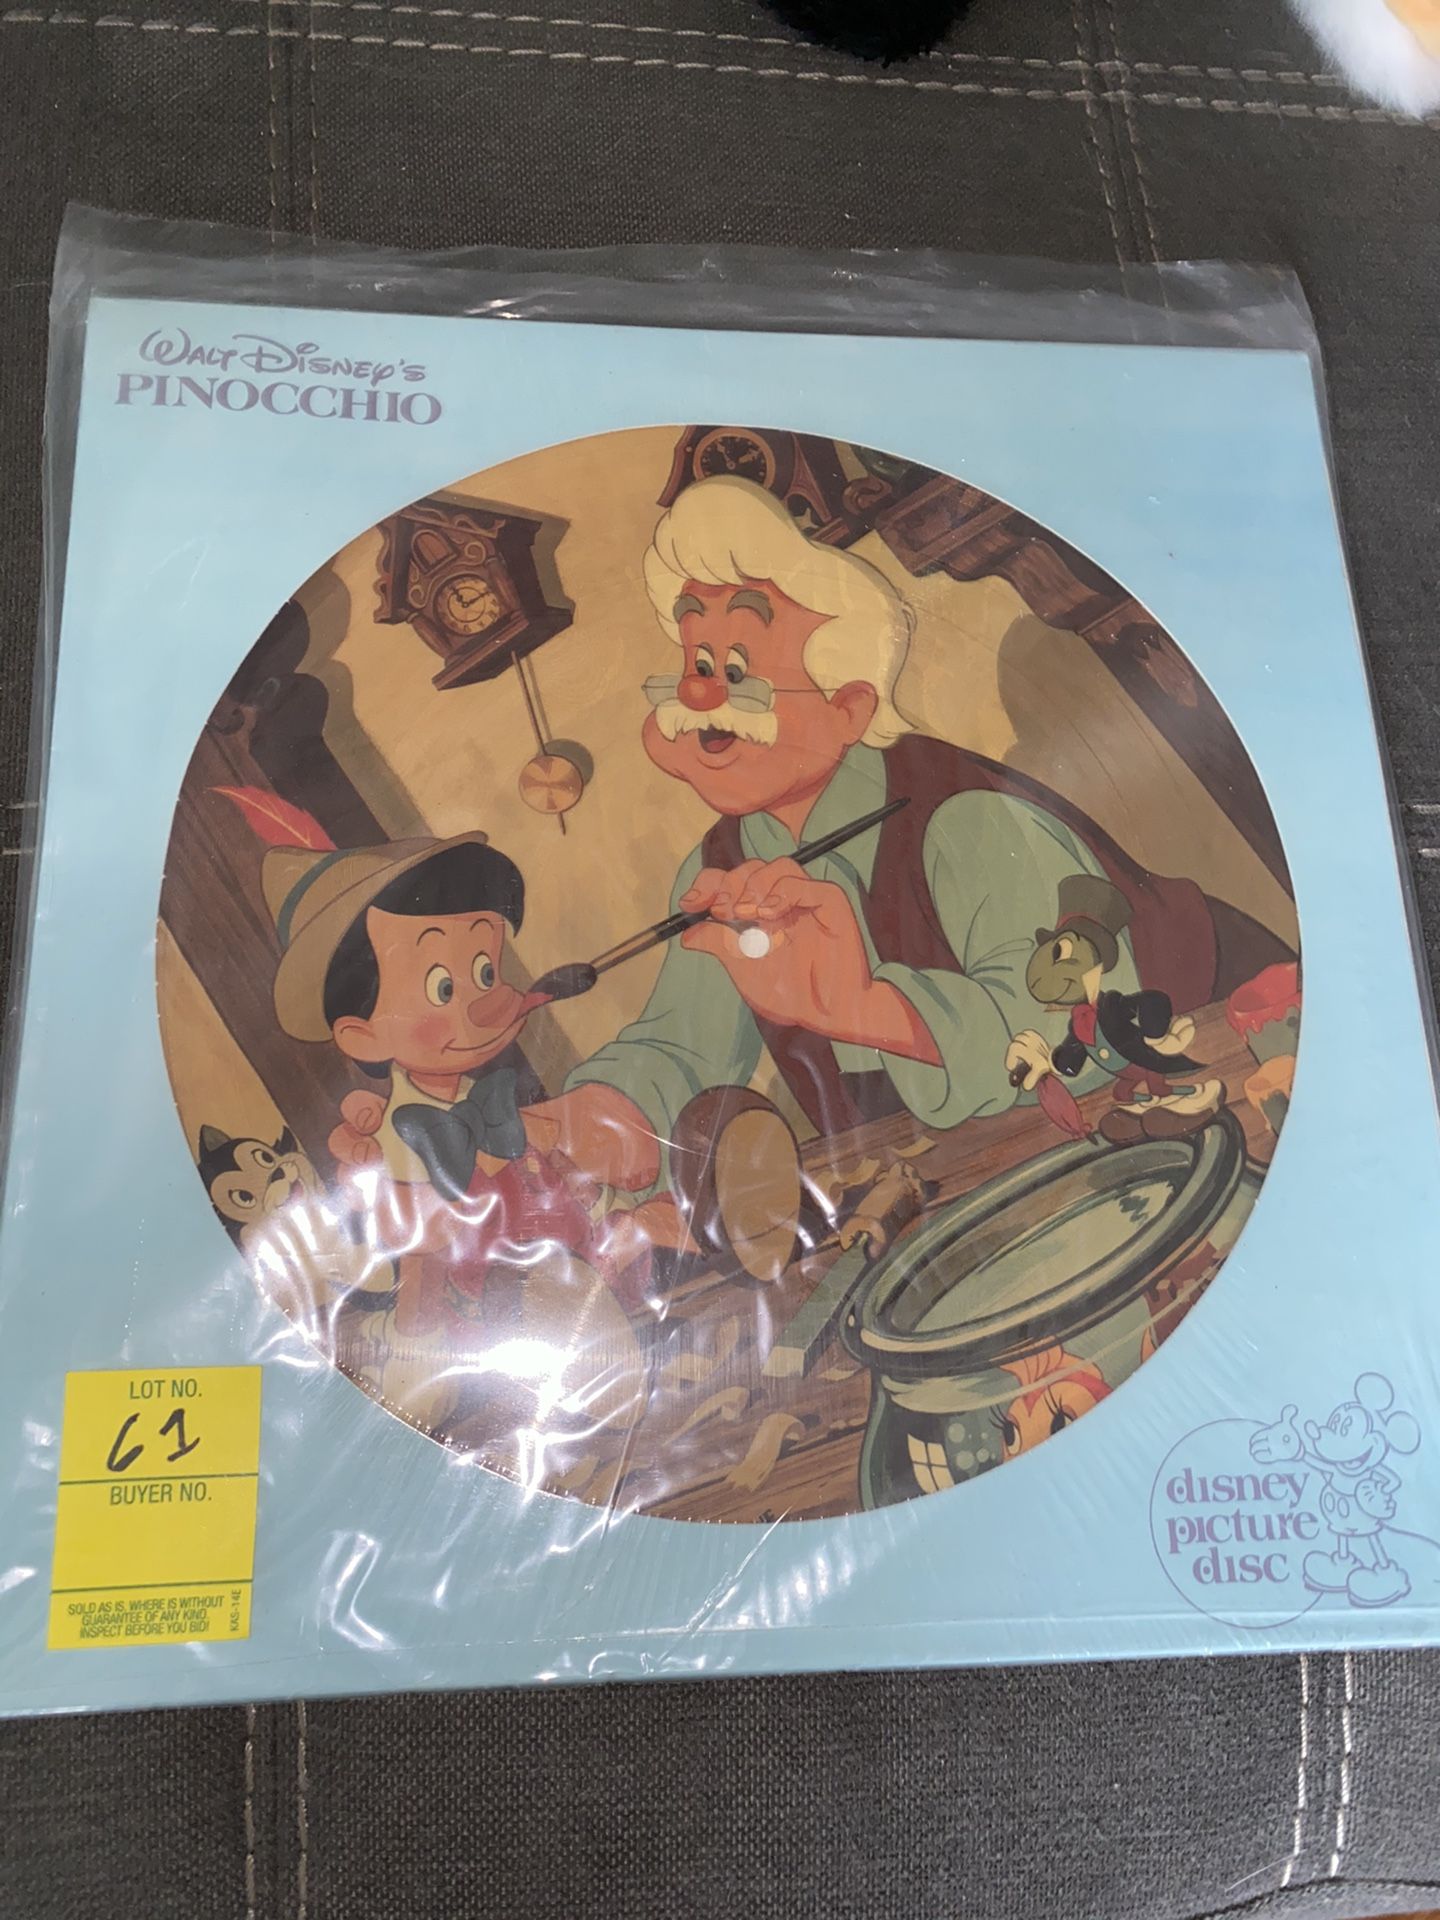 Extremely RARE 1981 Pinocchio Disney Vinyl Record